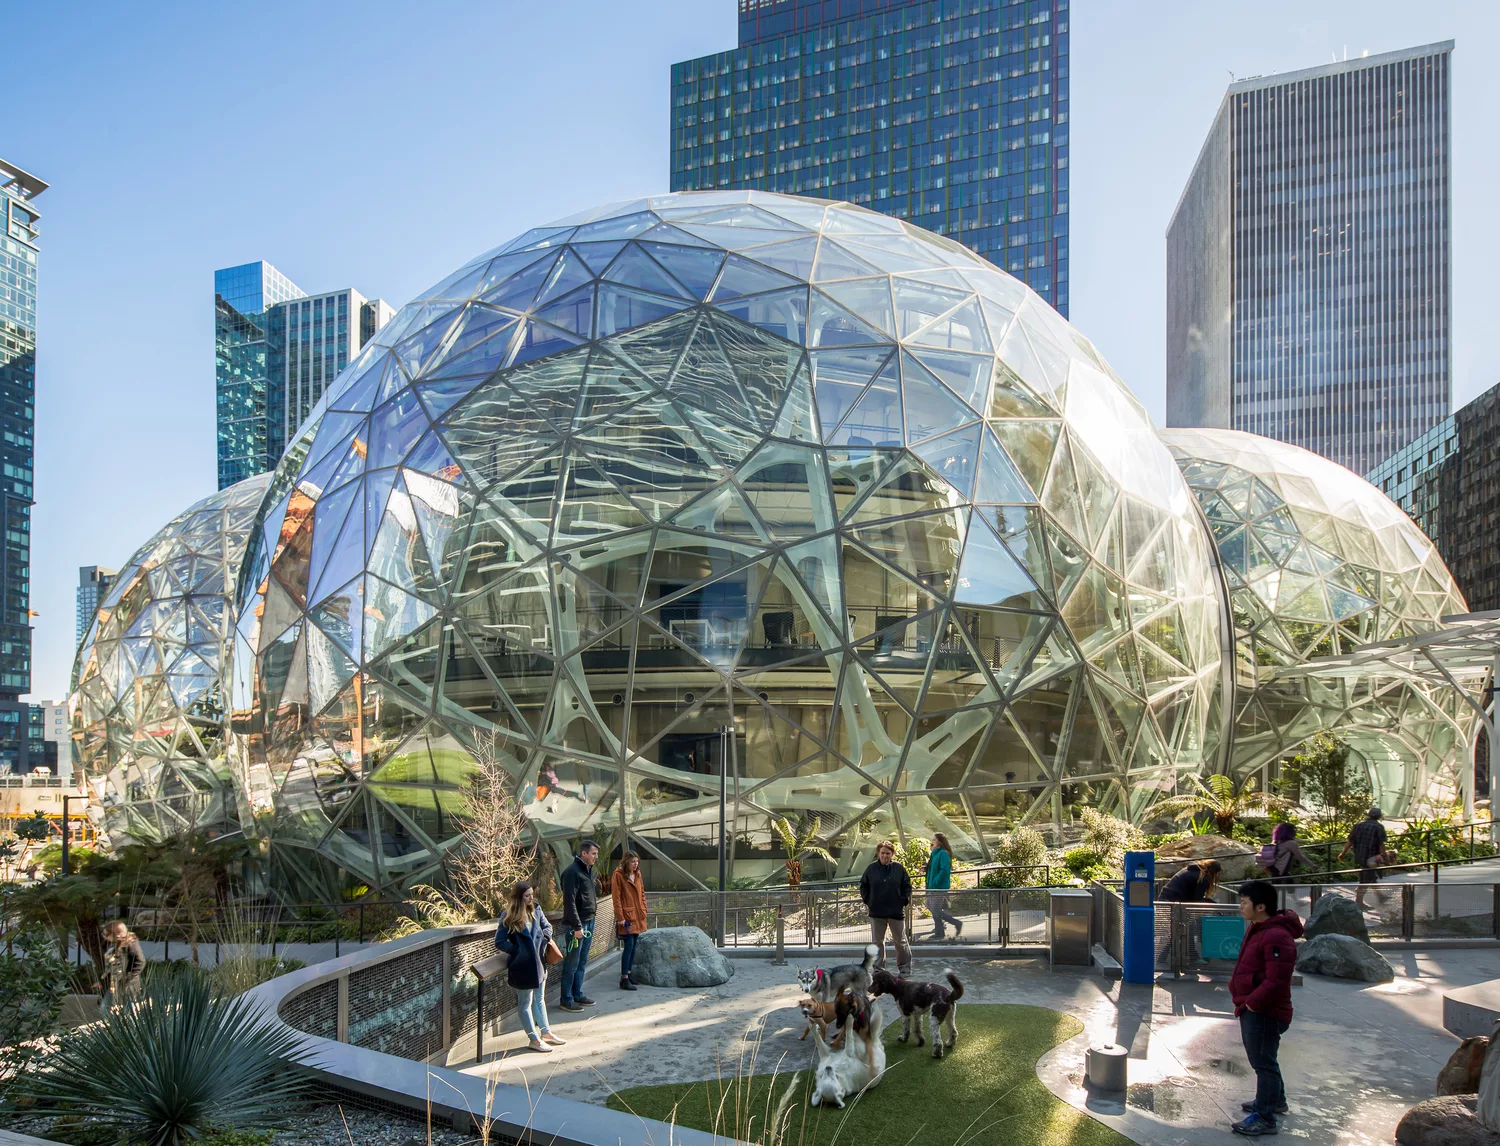 Amazon in the Regrade, The Spheres